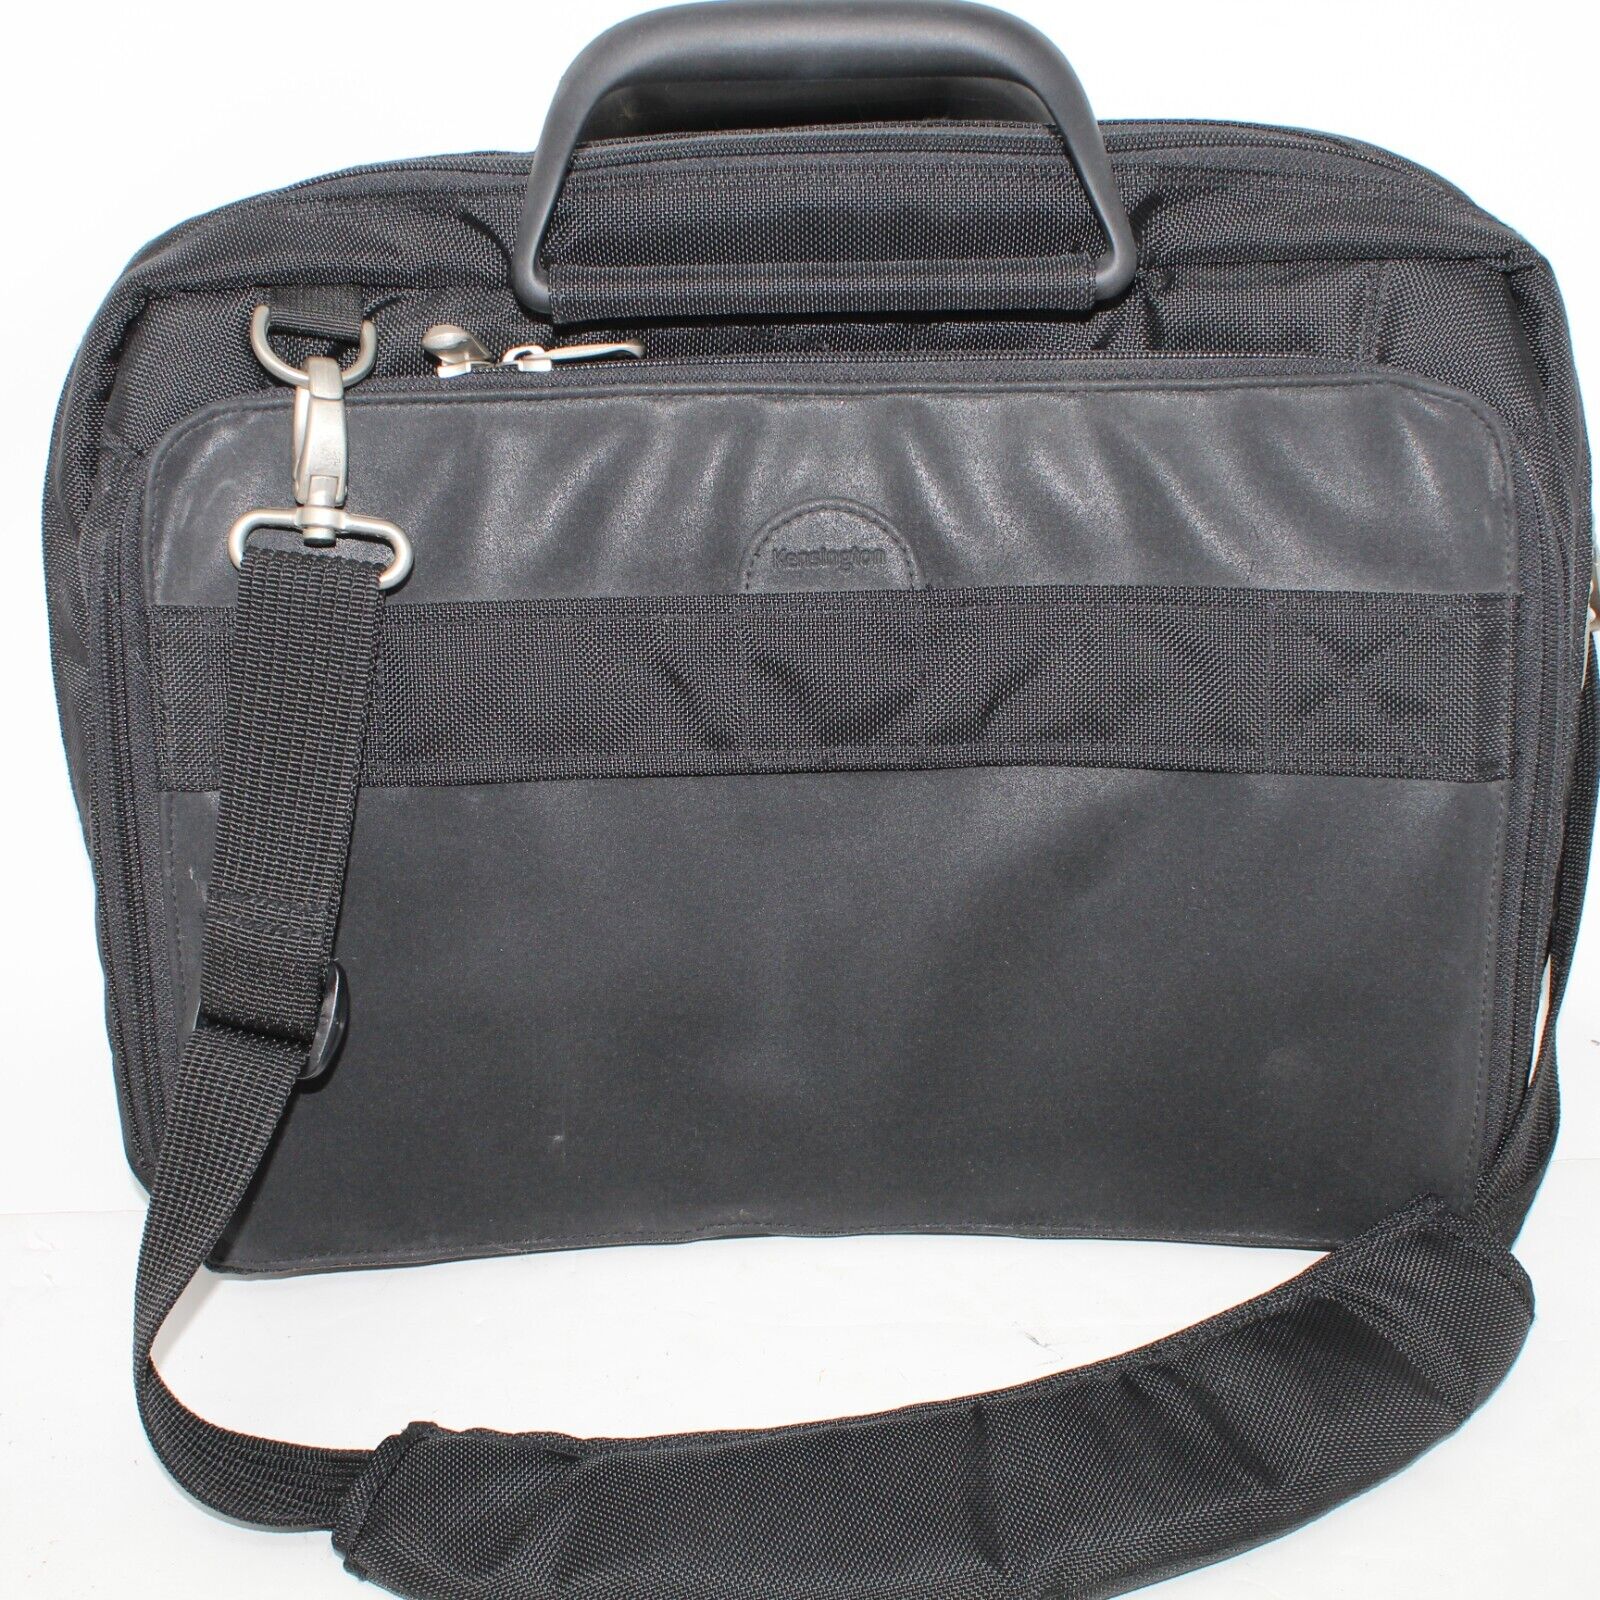 Kensington Contour Bag Black Full Zip Nylon Multi-Pocket Laptop Sleeve Shoulder